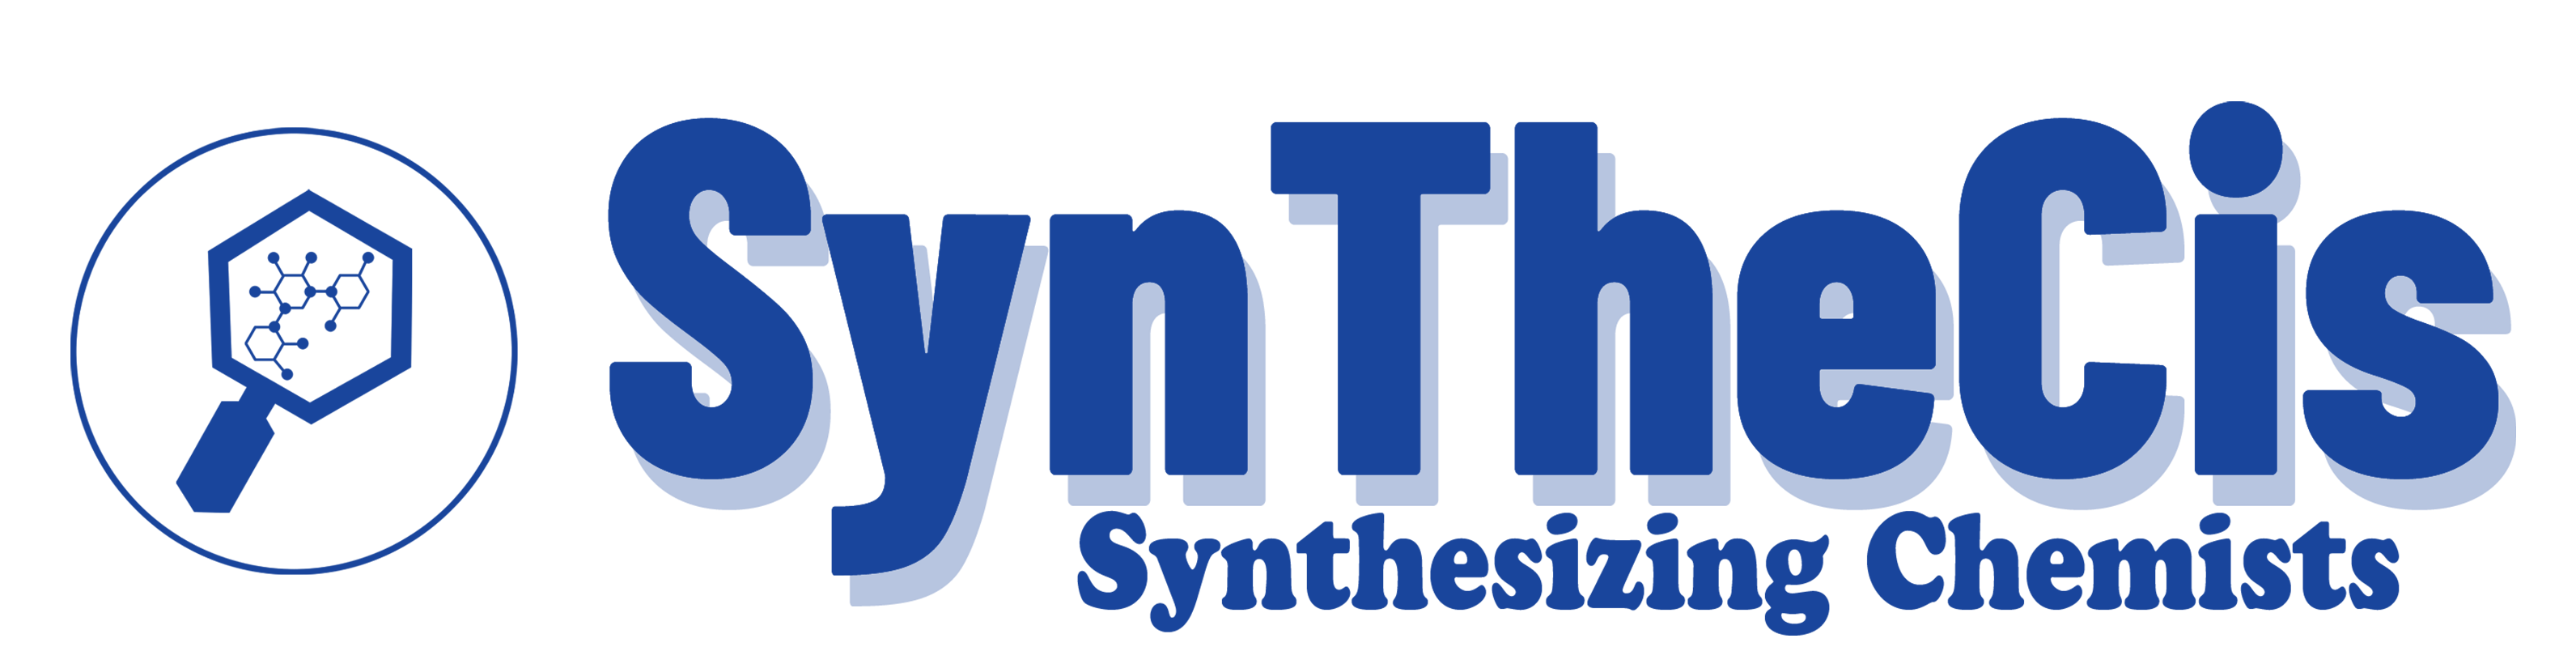 Synthecis